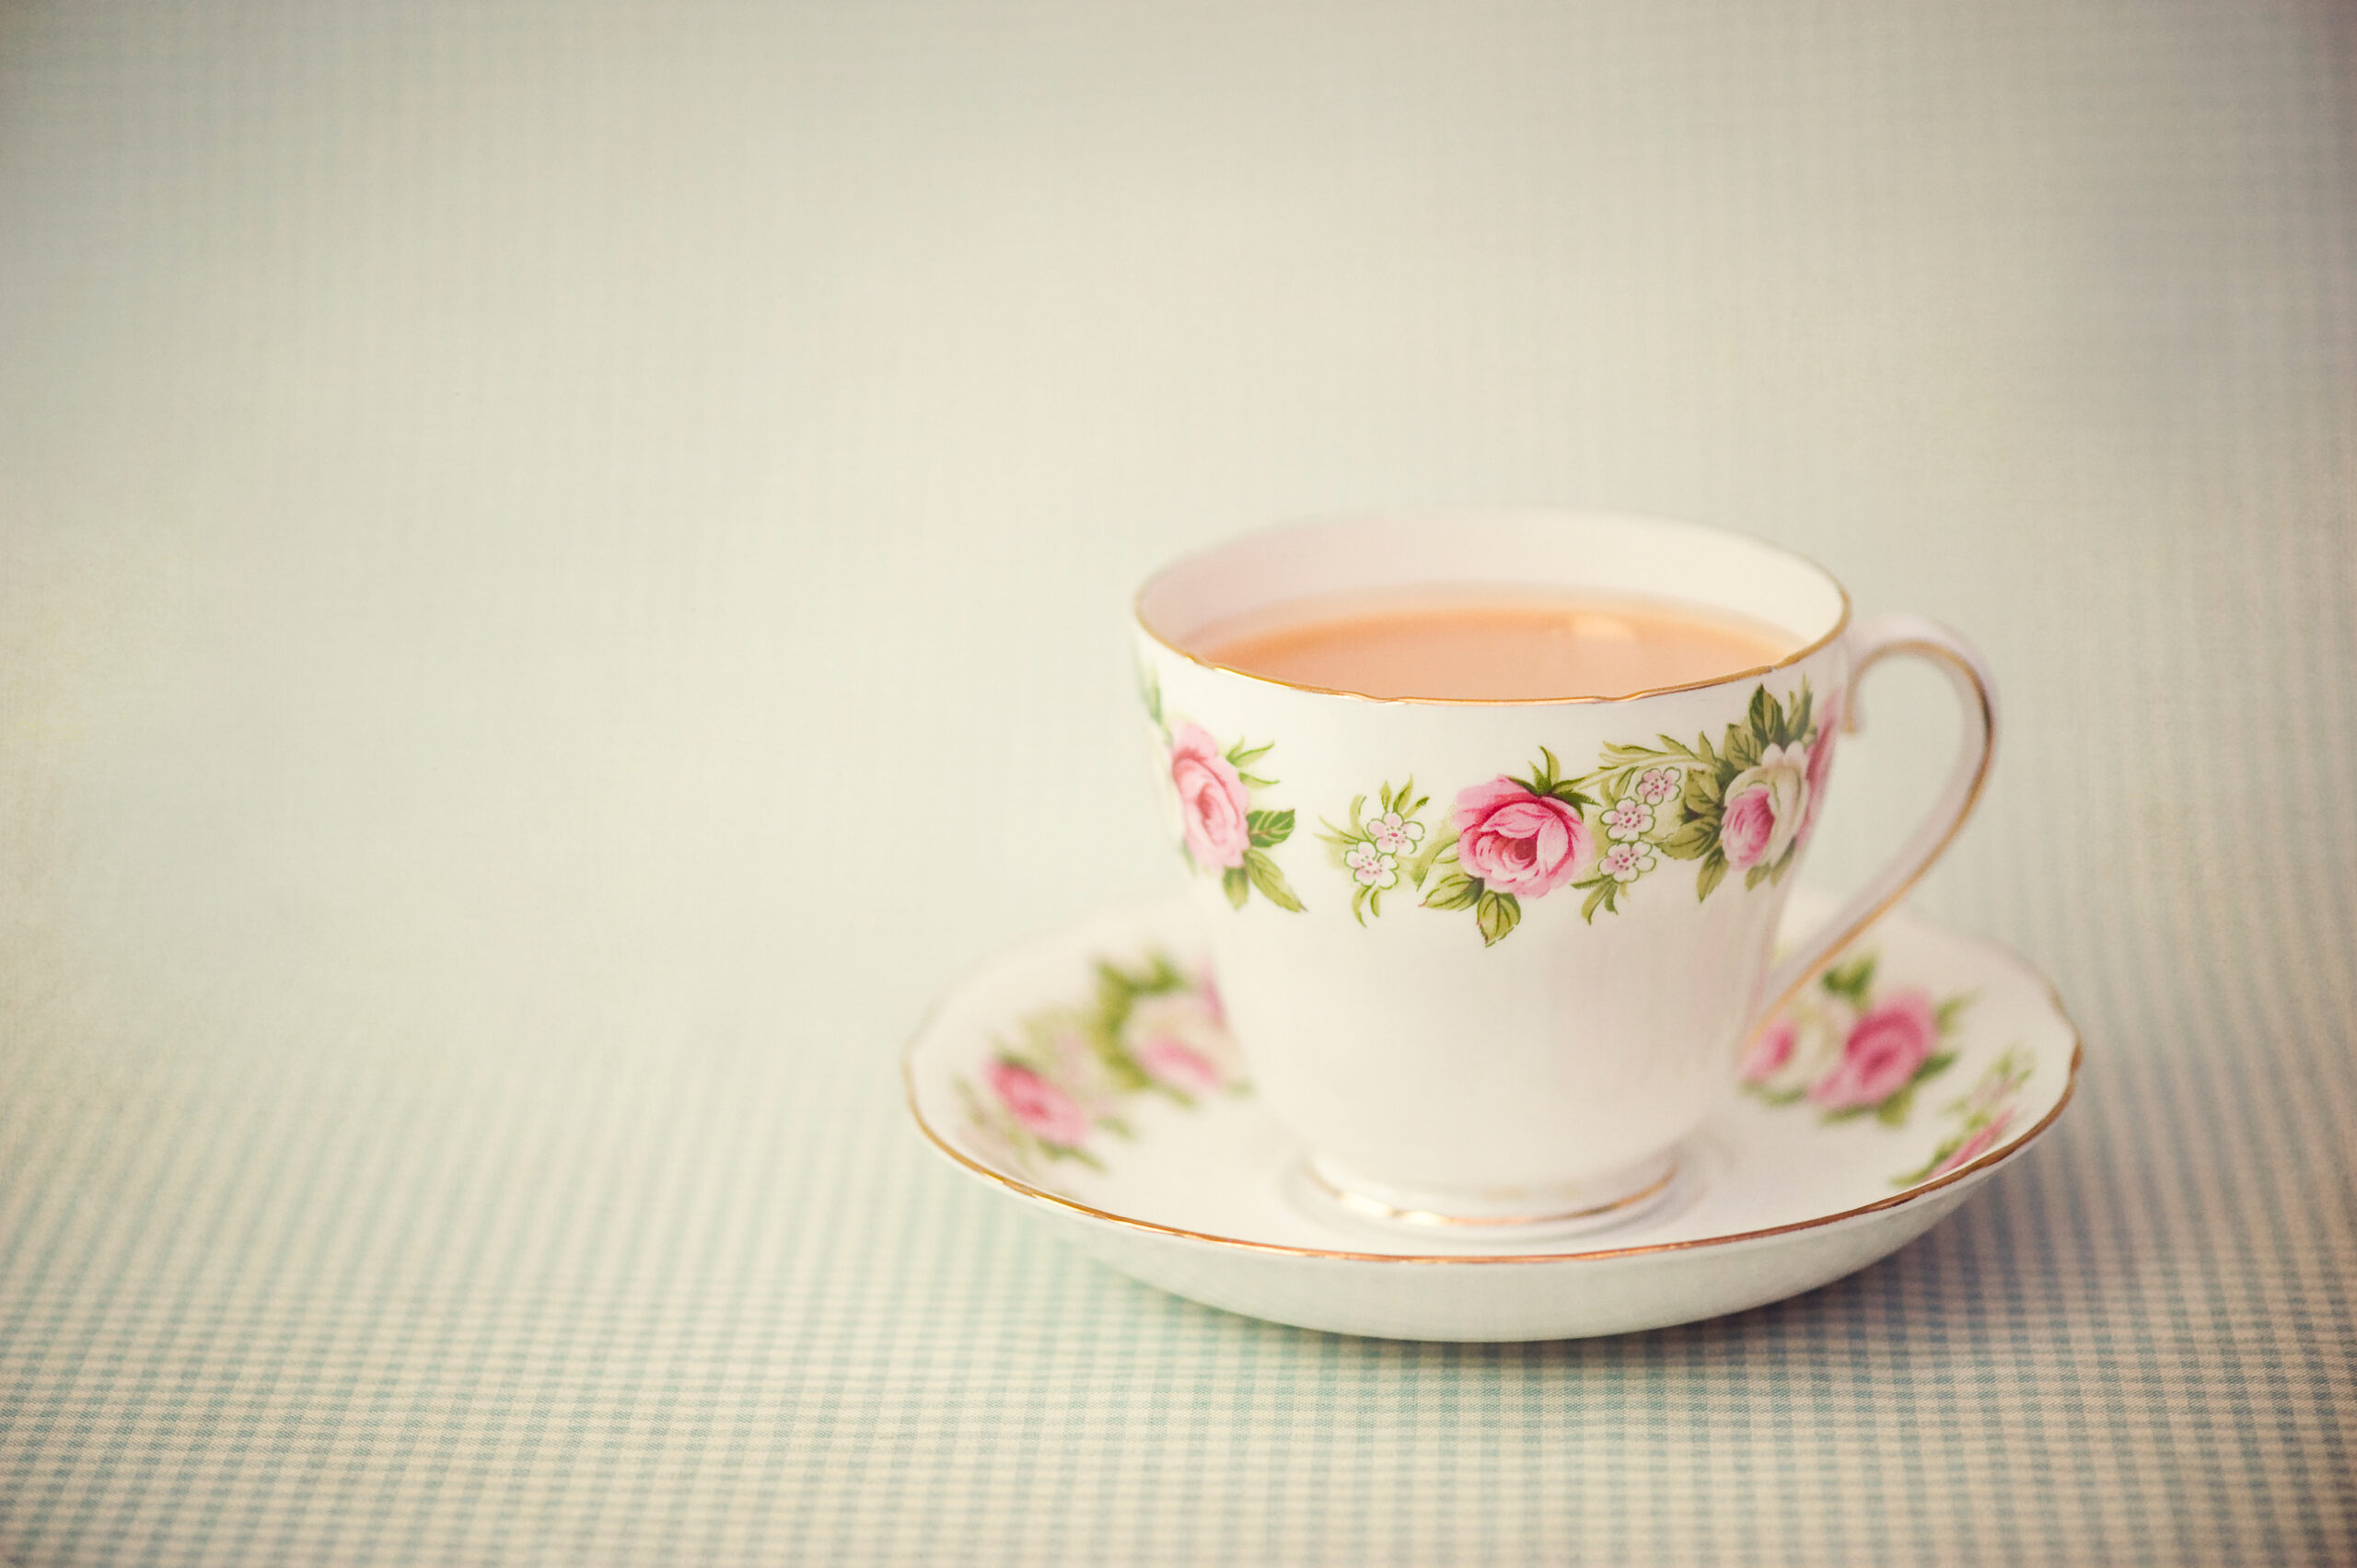 British cup of tea